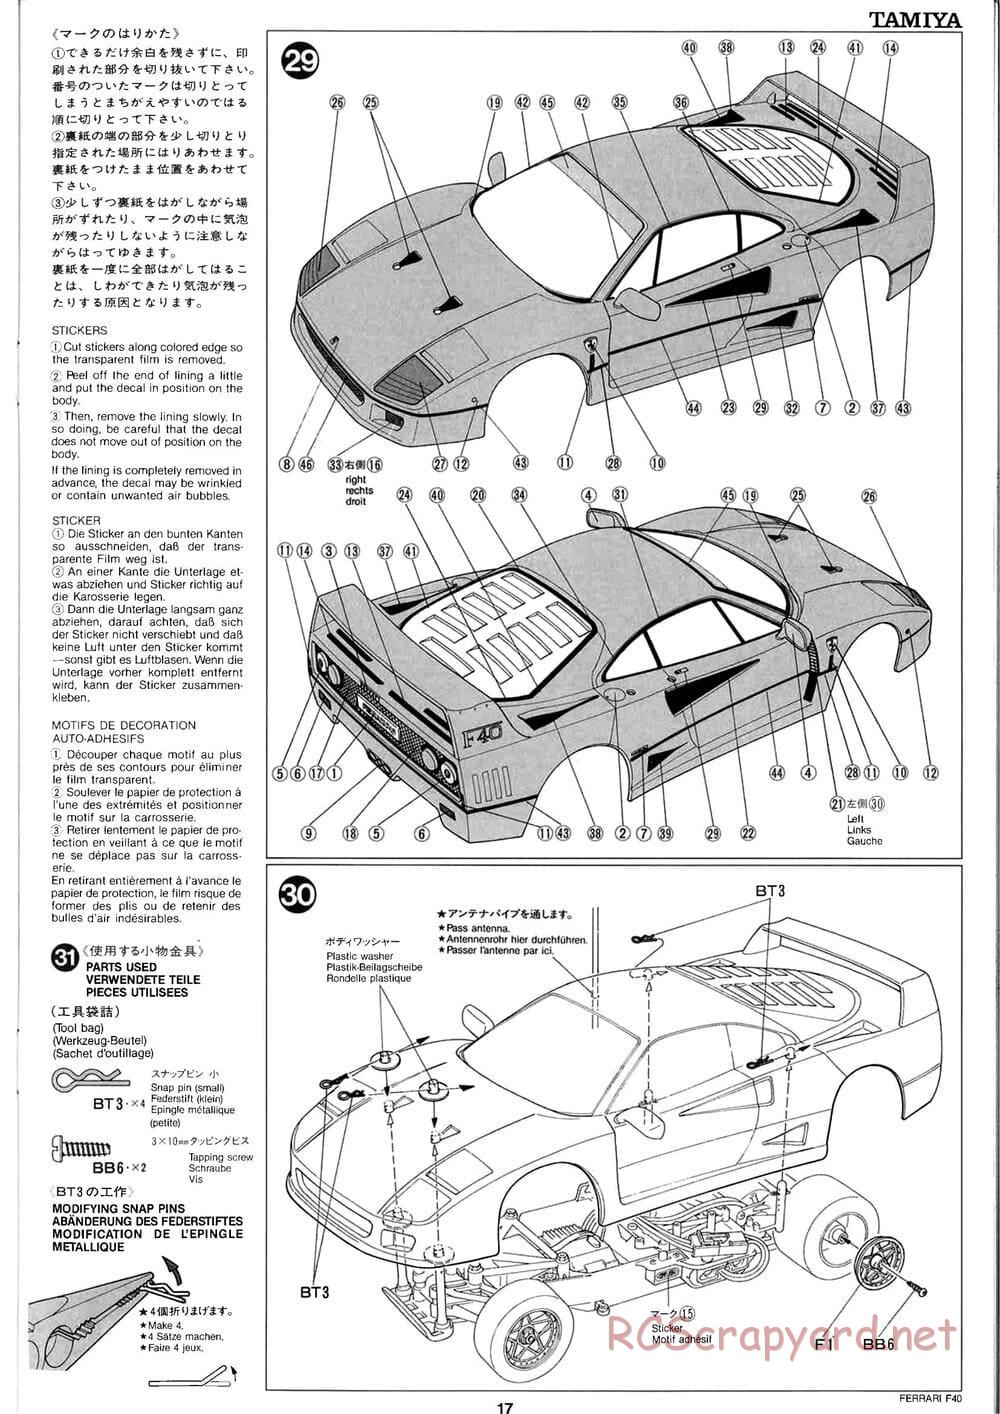 Tamiya - Ferrari F40 - Group-C Chassis - Manual - Page 17